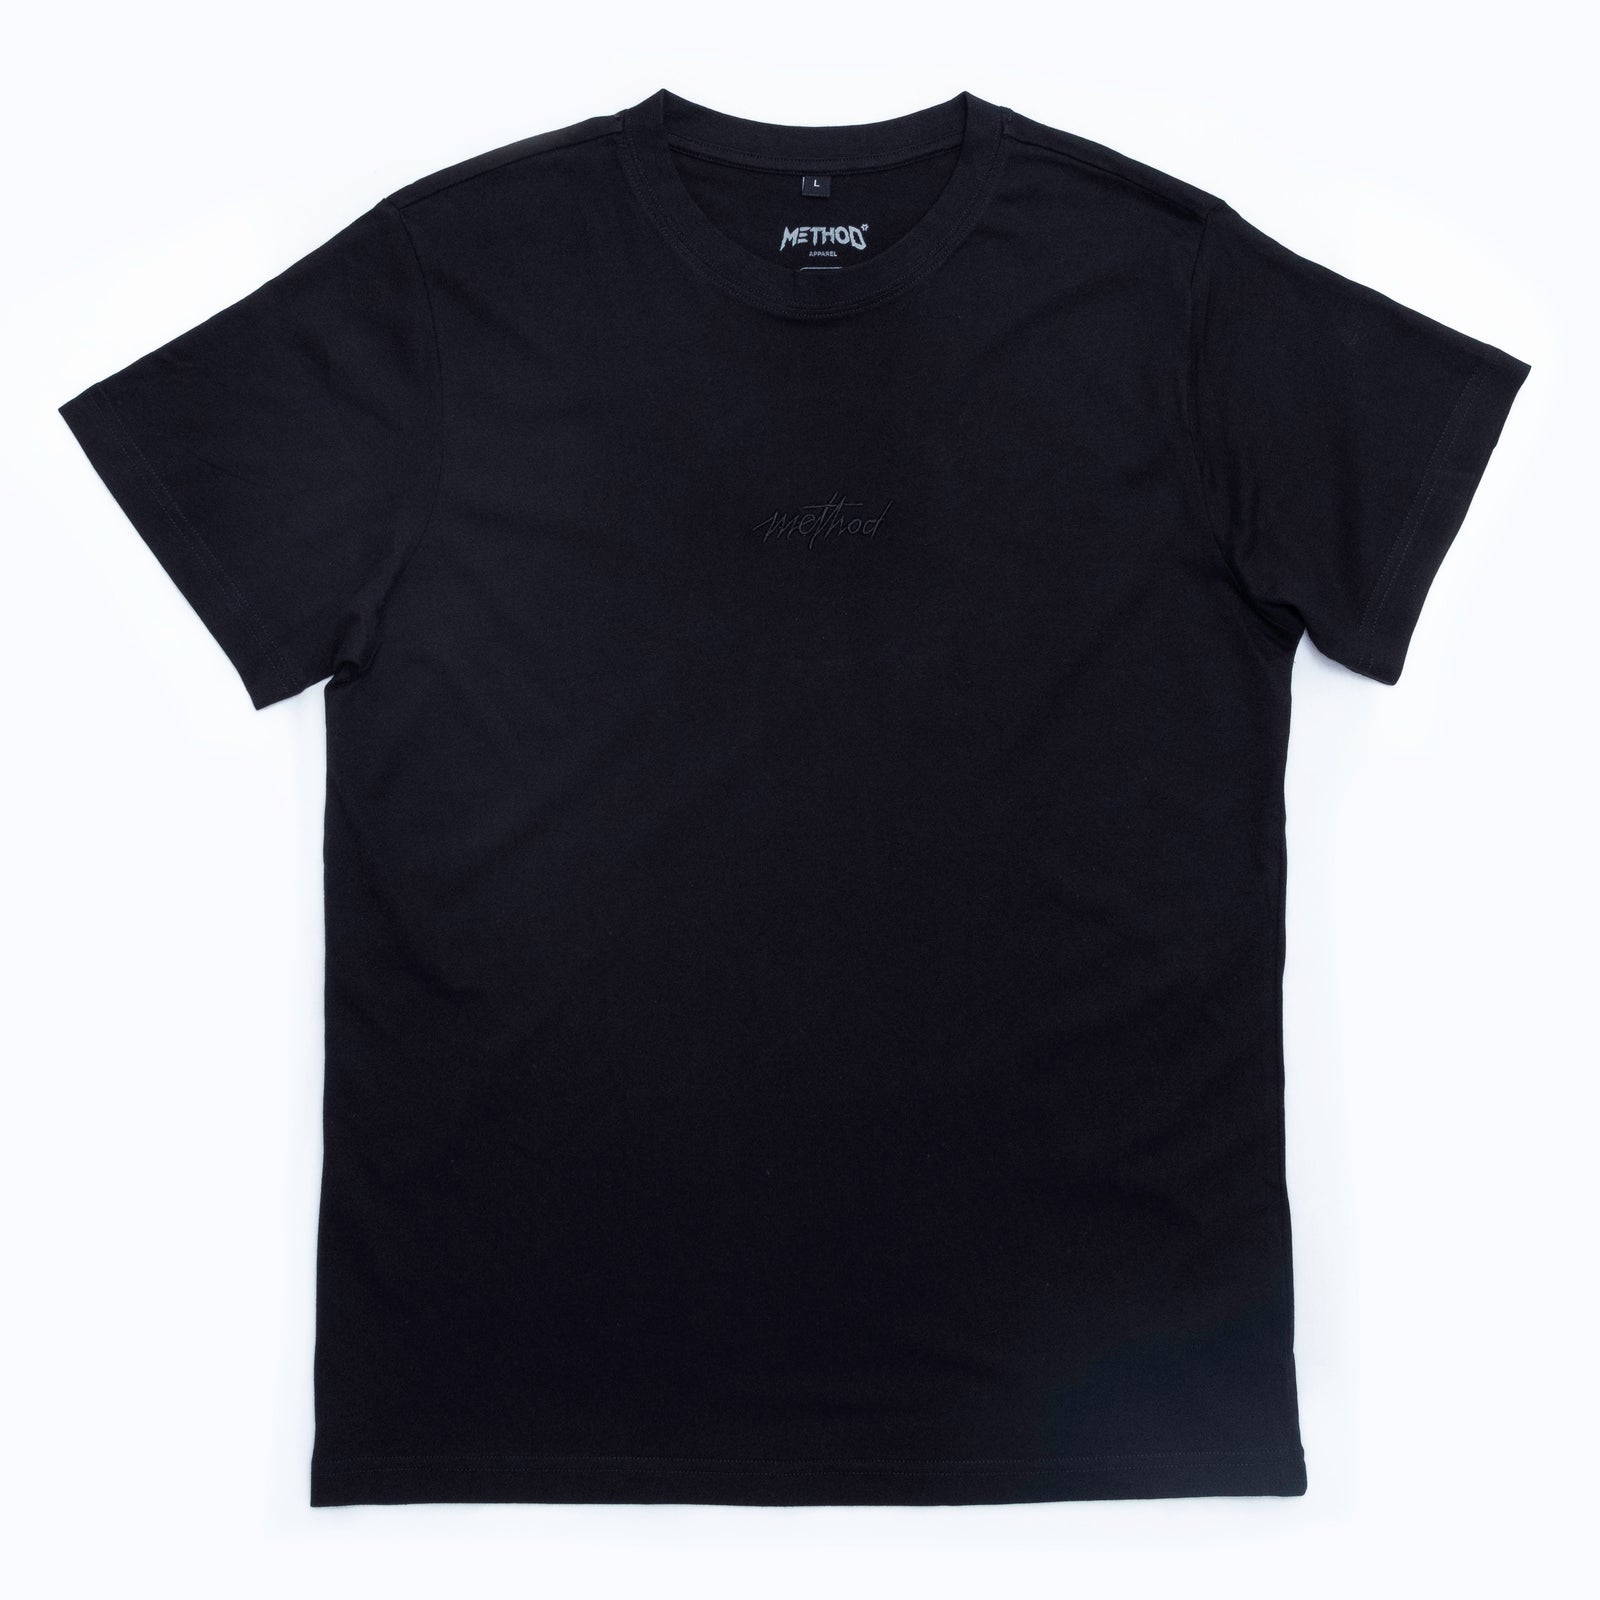 Method Signature T-Shirt - Black